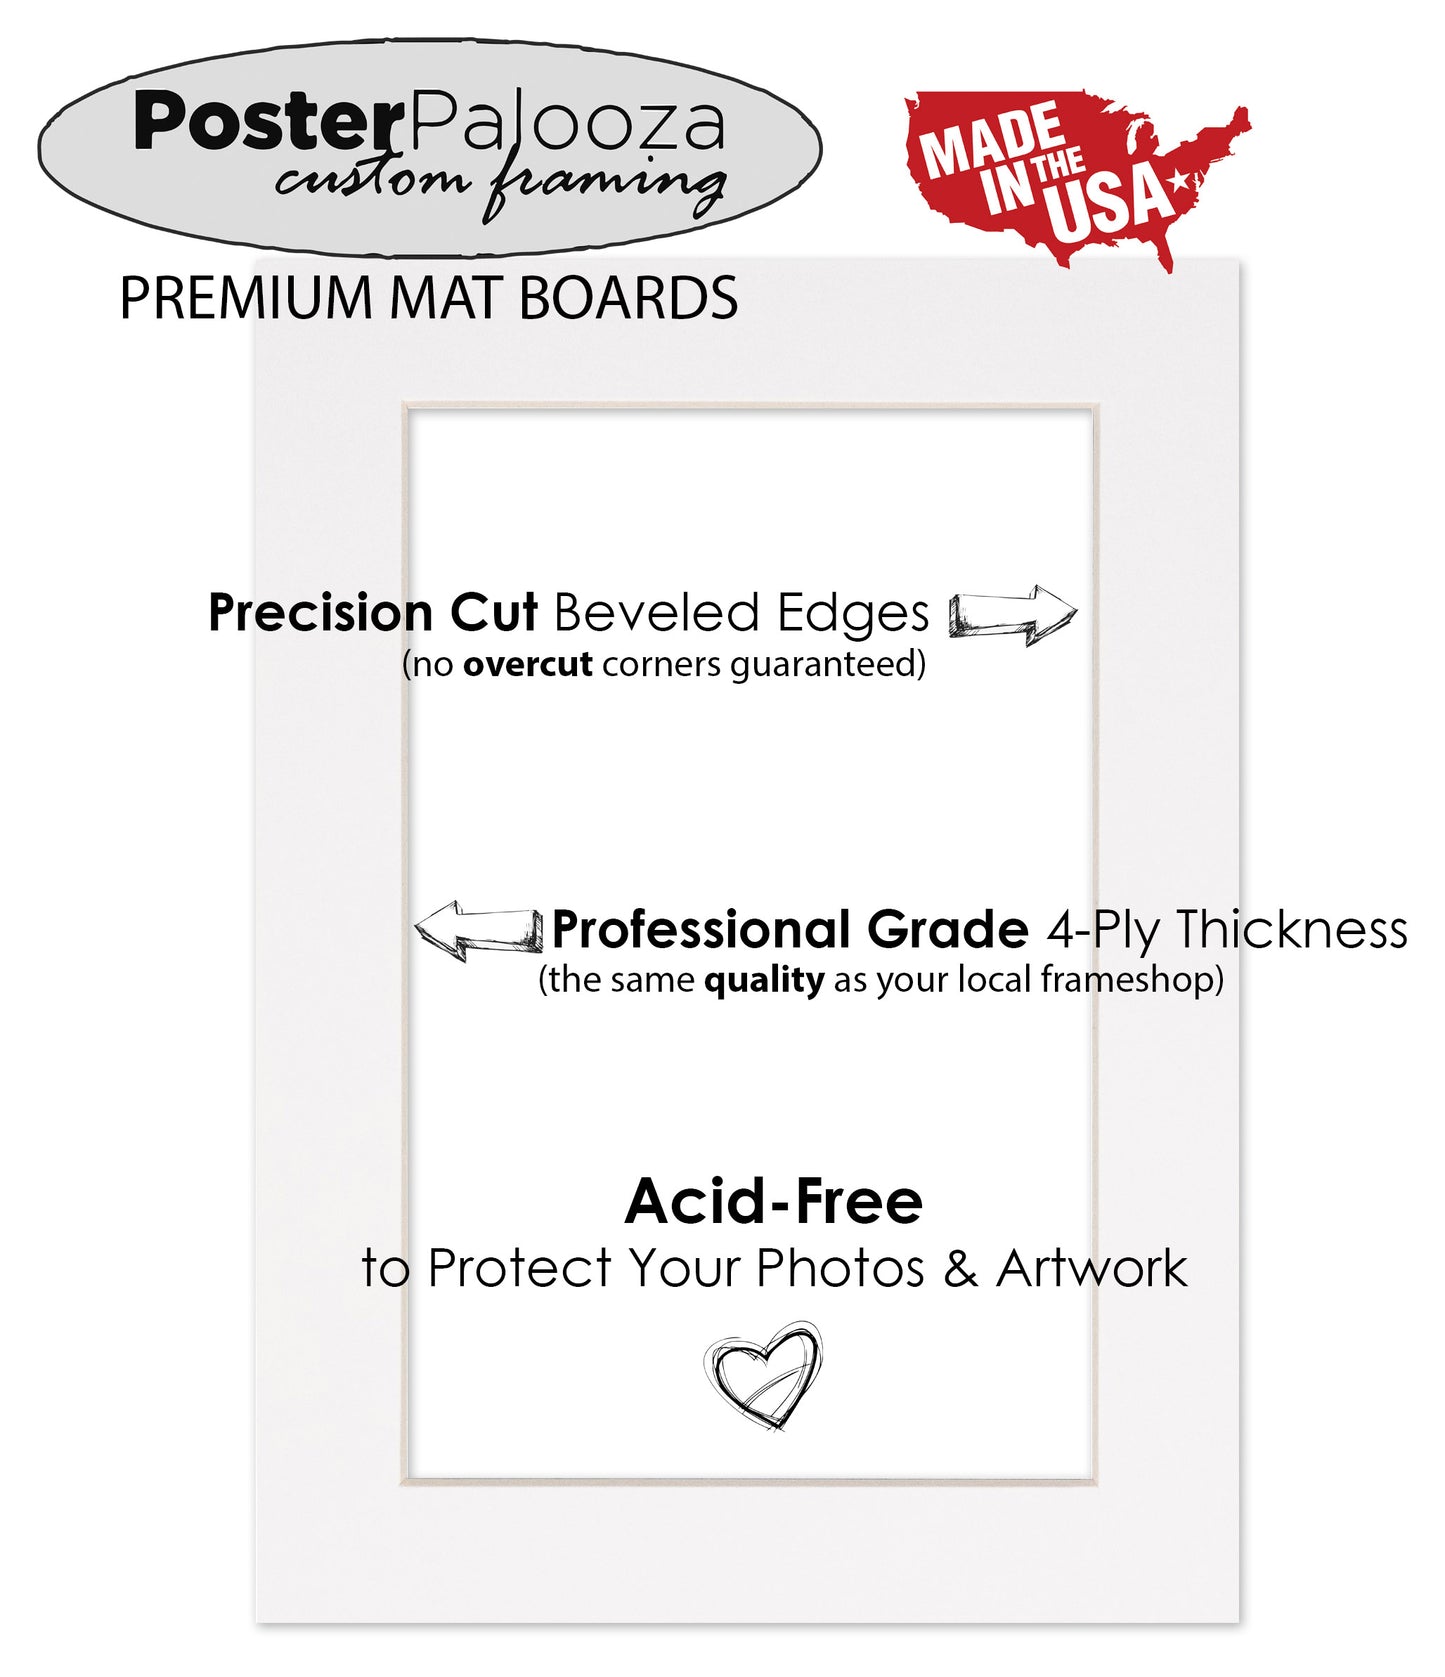 Pack of 25 Black Precut Acid-Free Matboards